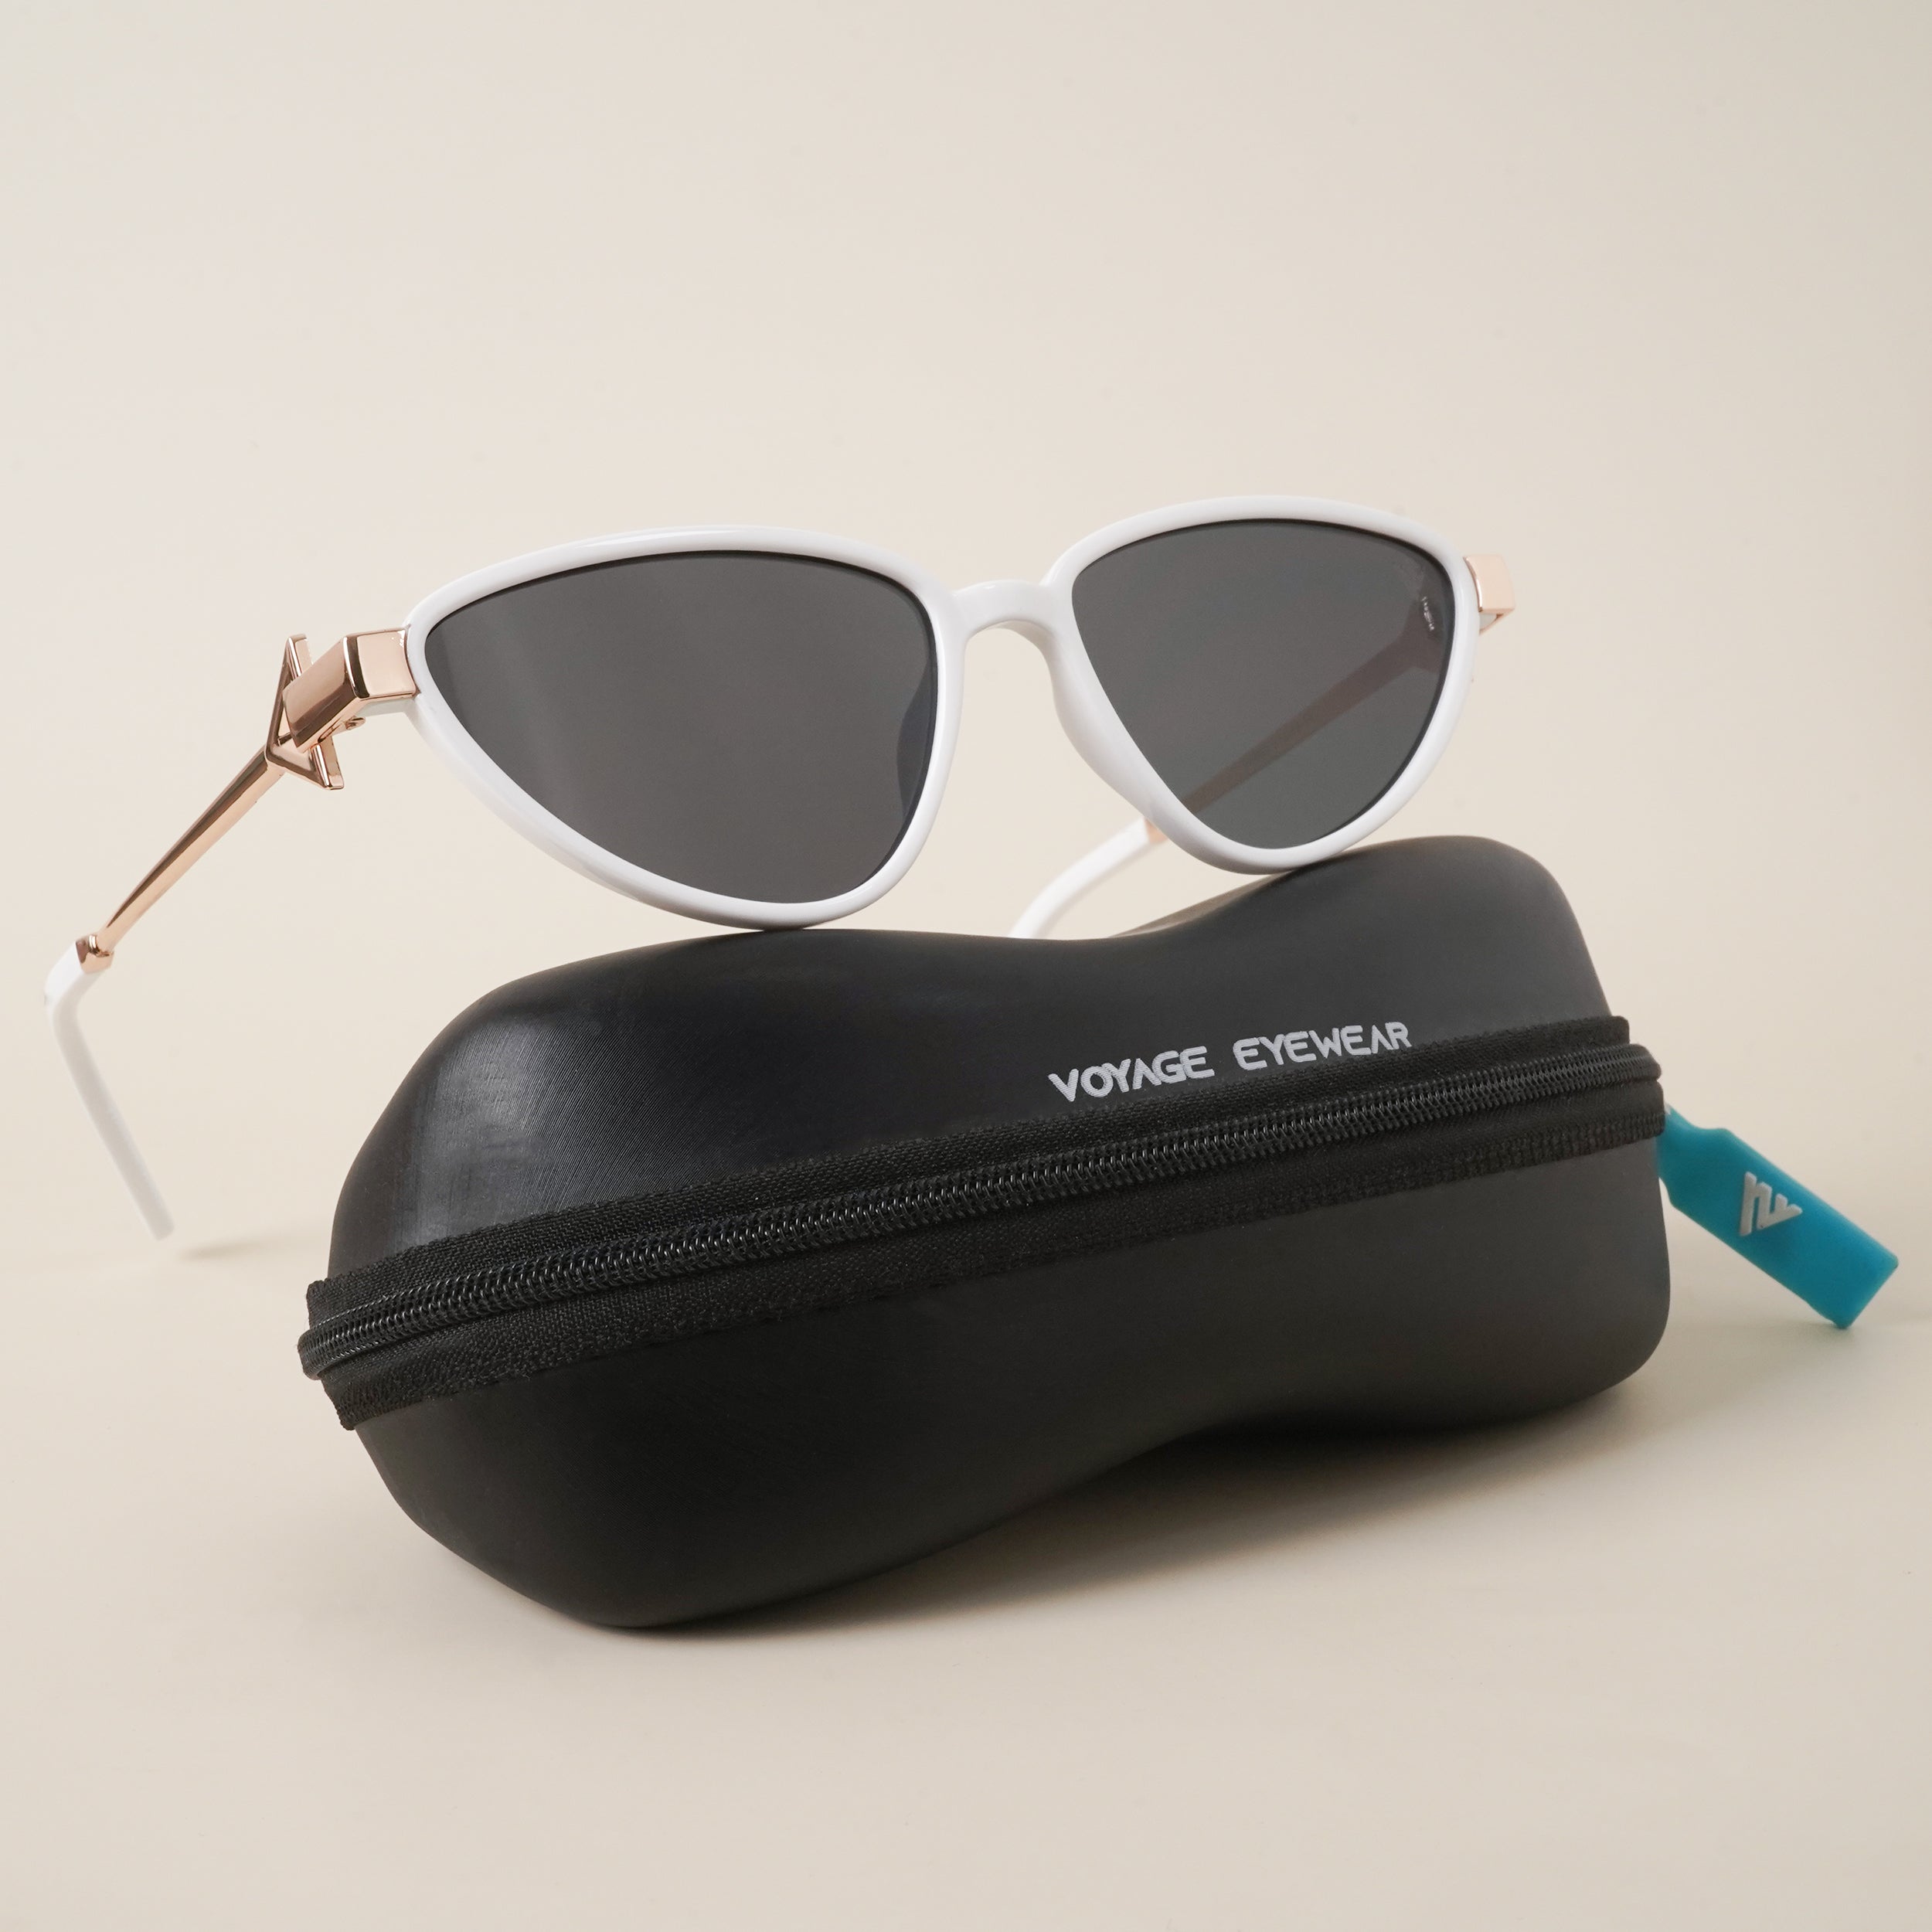 Voyage Black Cateye Sunglasses for Women - MG3984